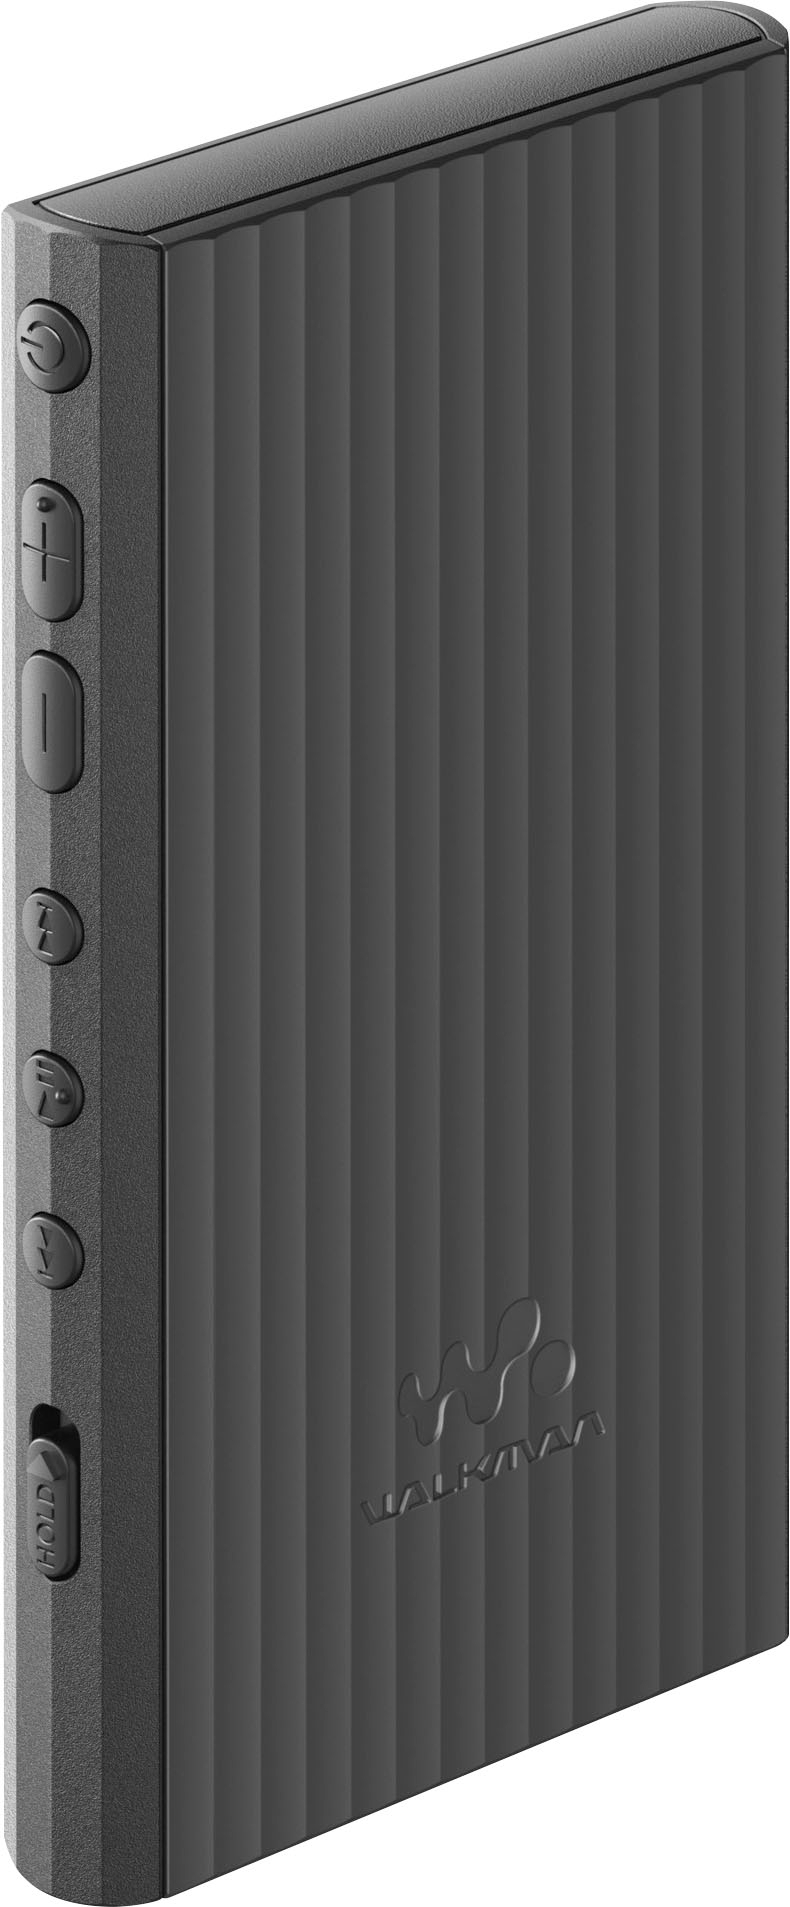 Sony NW-A306 Walkman A Series Black NWA306/B - Best Buy